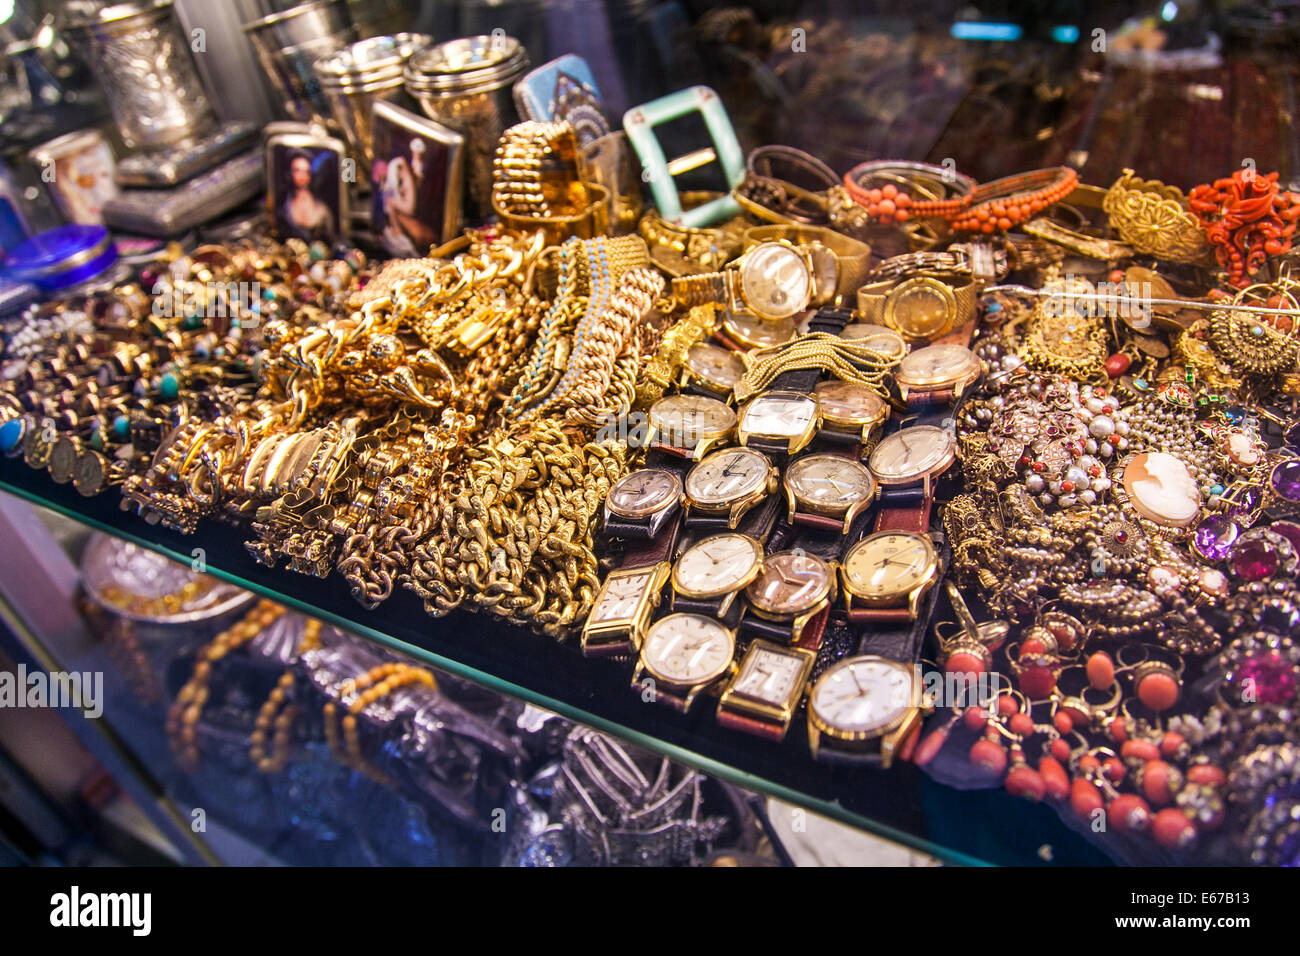 Jewelery Grand bazaar old town Istanbul Stock Photo - Alamy